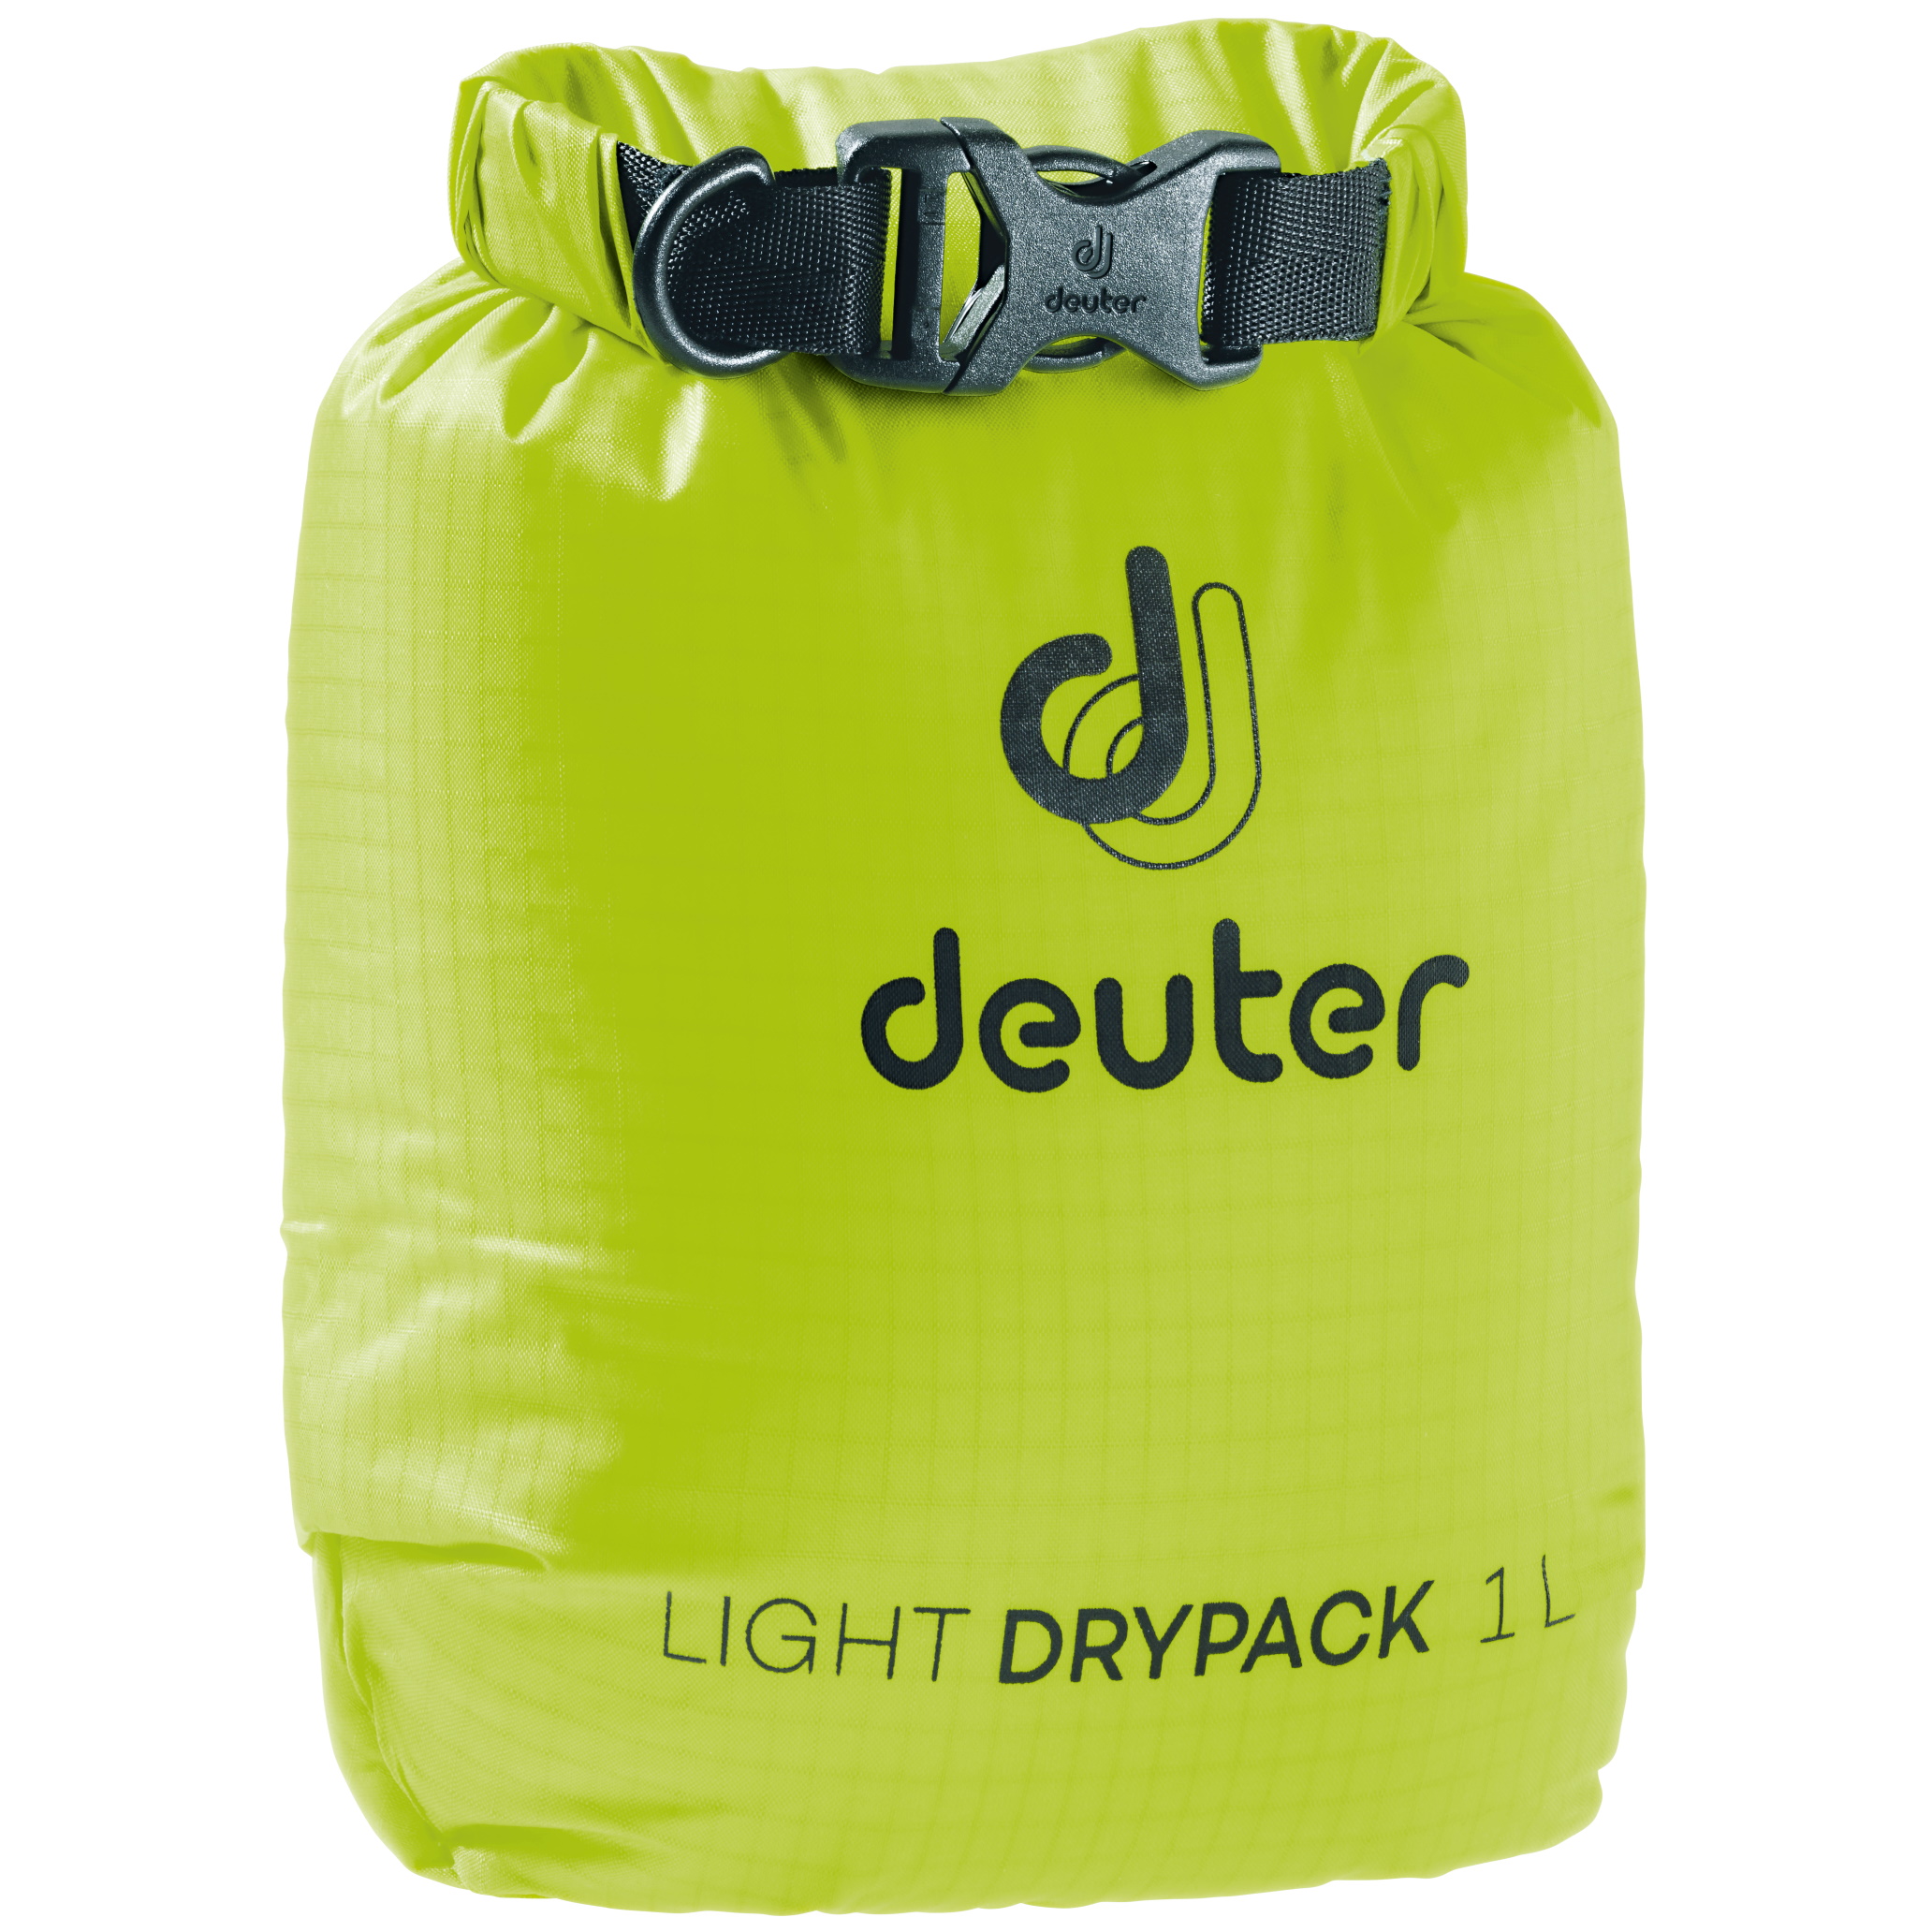 Deuter Light Drypack 1 Citrus